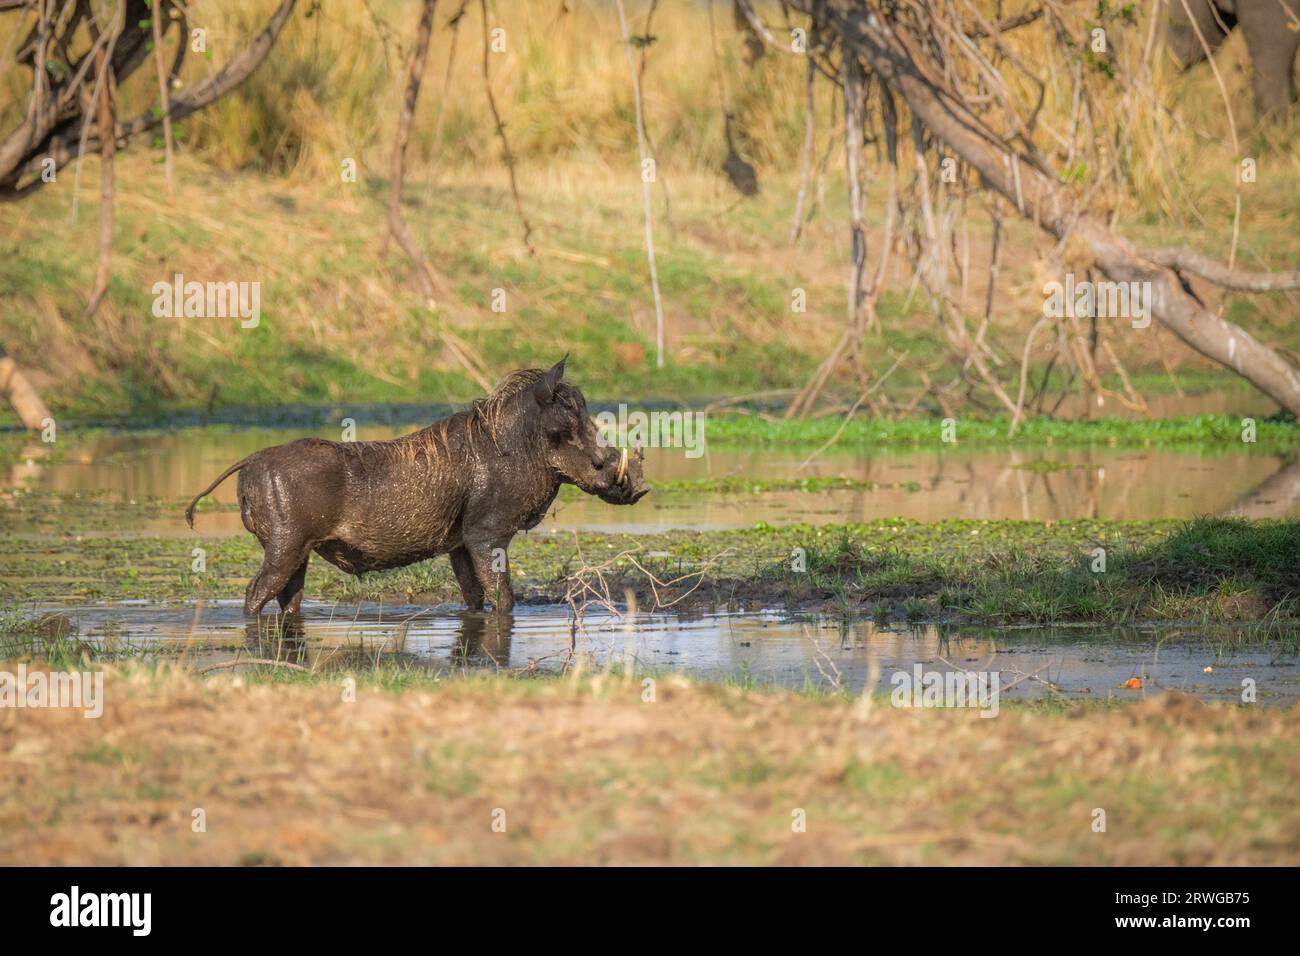 Warthog (Phacochoerus africanus) si erge in acqua in splendide paludi. Basso fiume Zambesi, Zambia, Africa Foto Stock